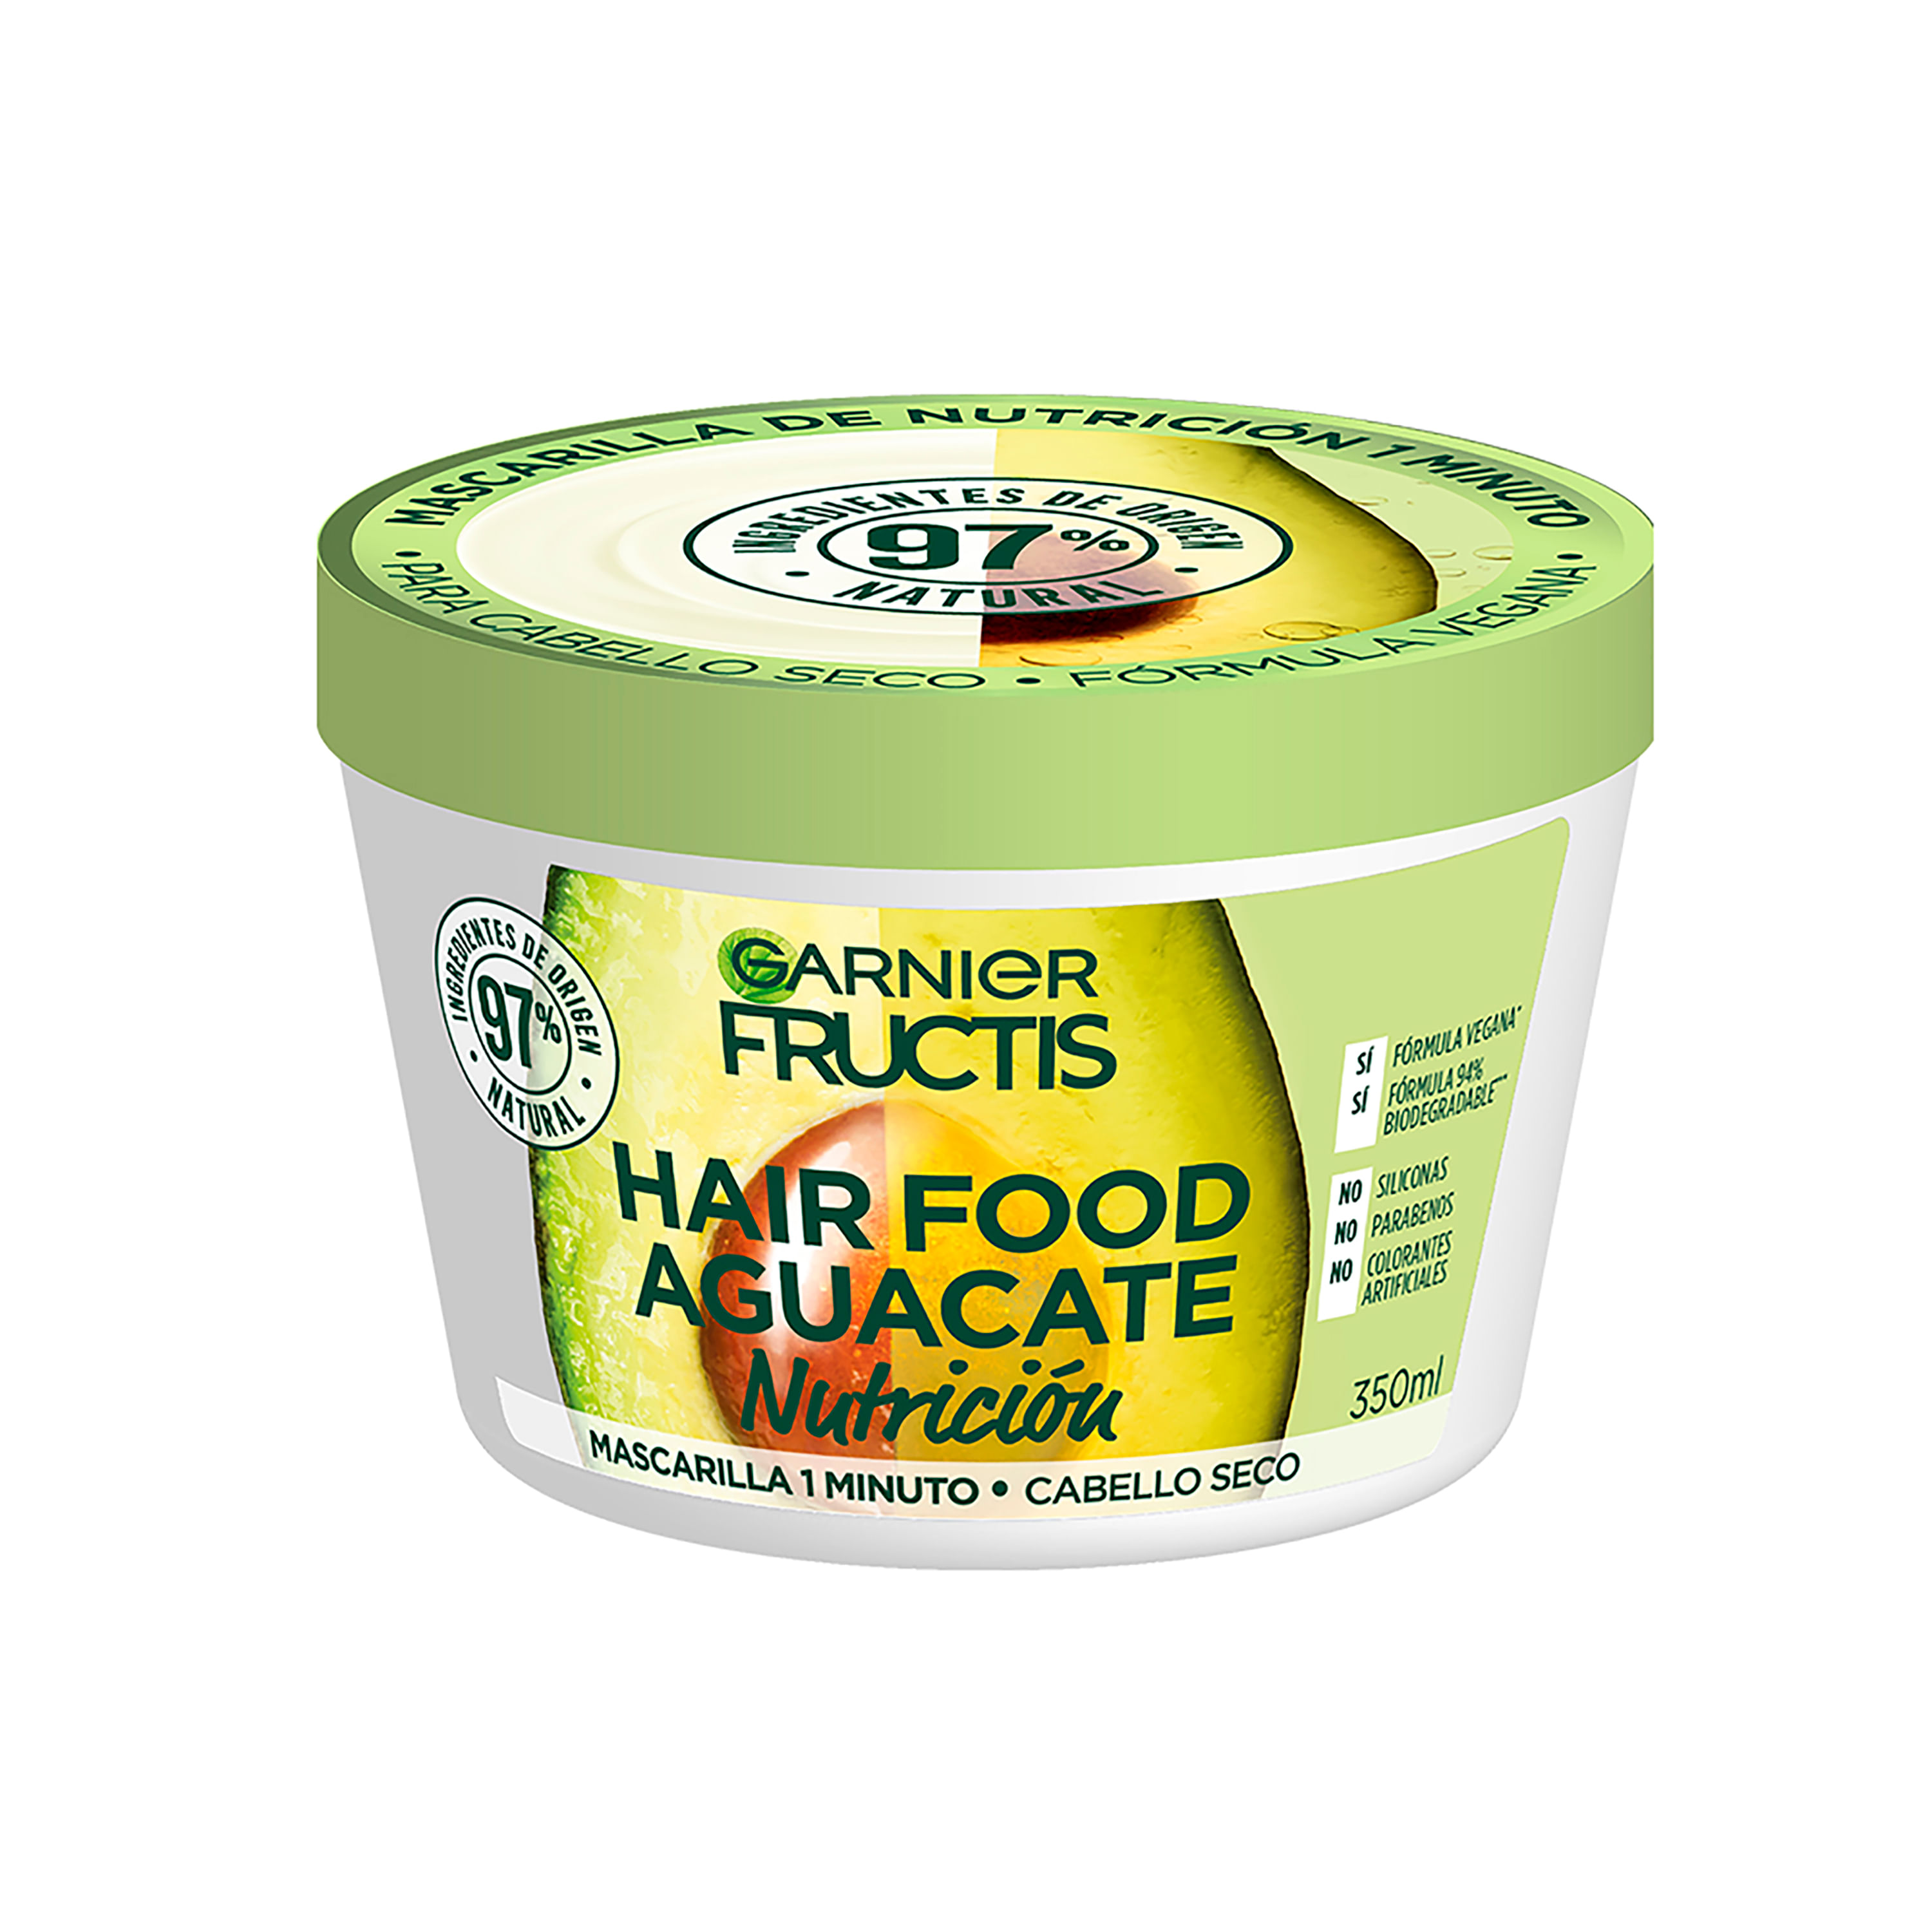 Comprar Hair Food De Nutrición Garnier Fructis Aguacate- | Walmart Costa Rica